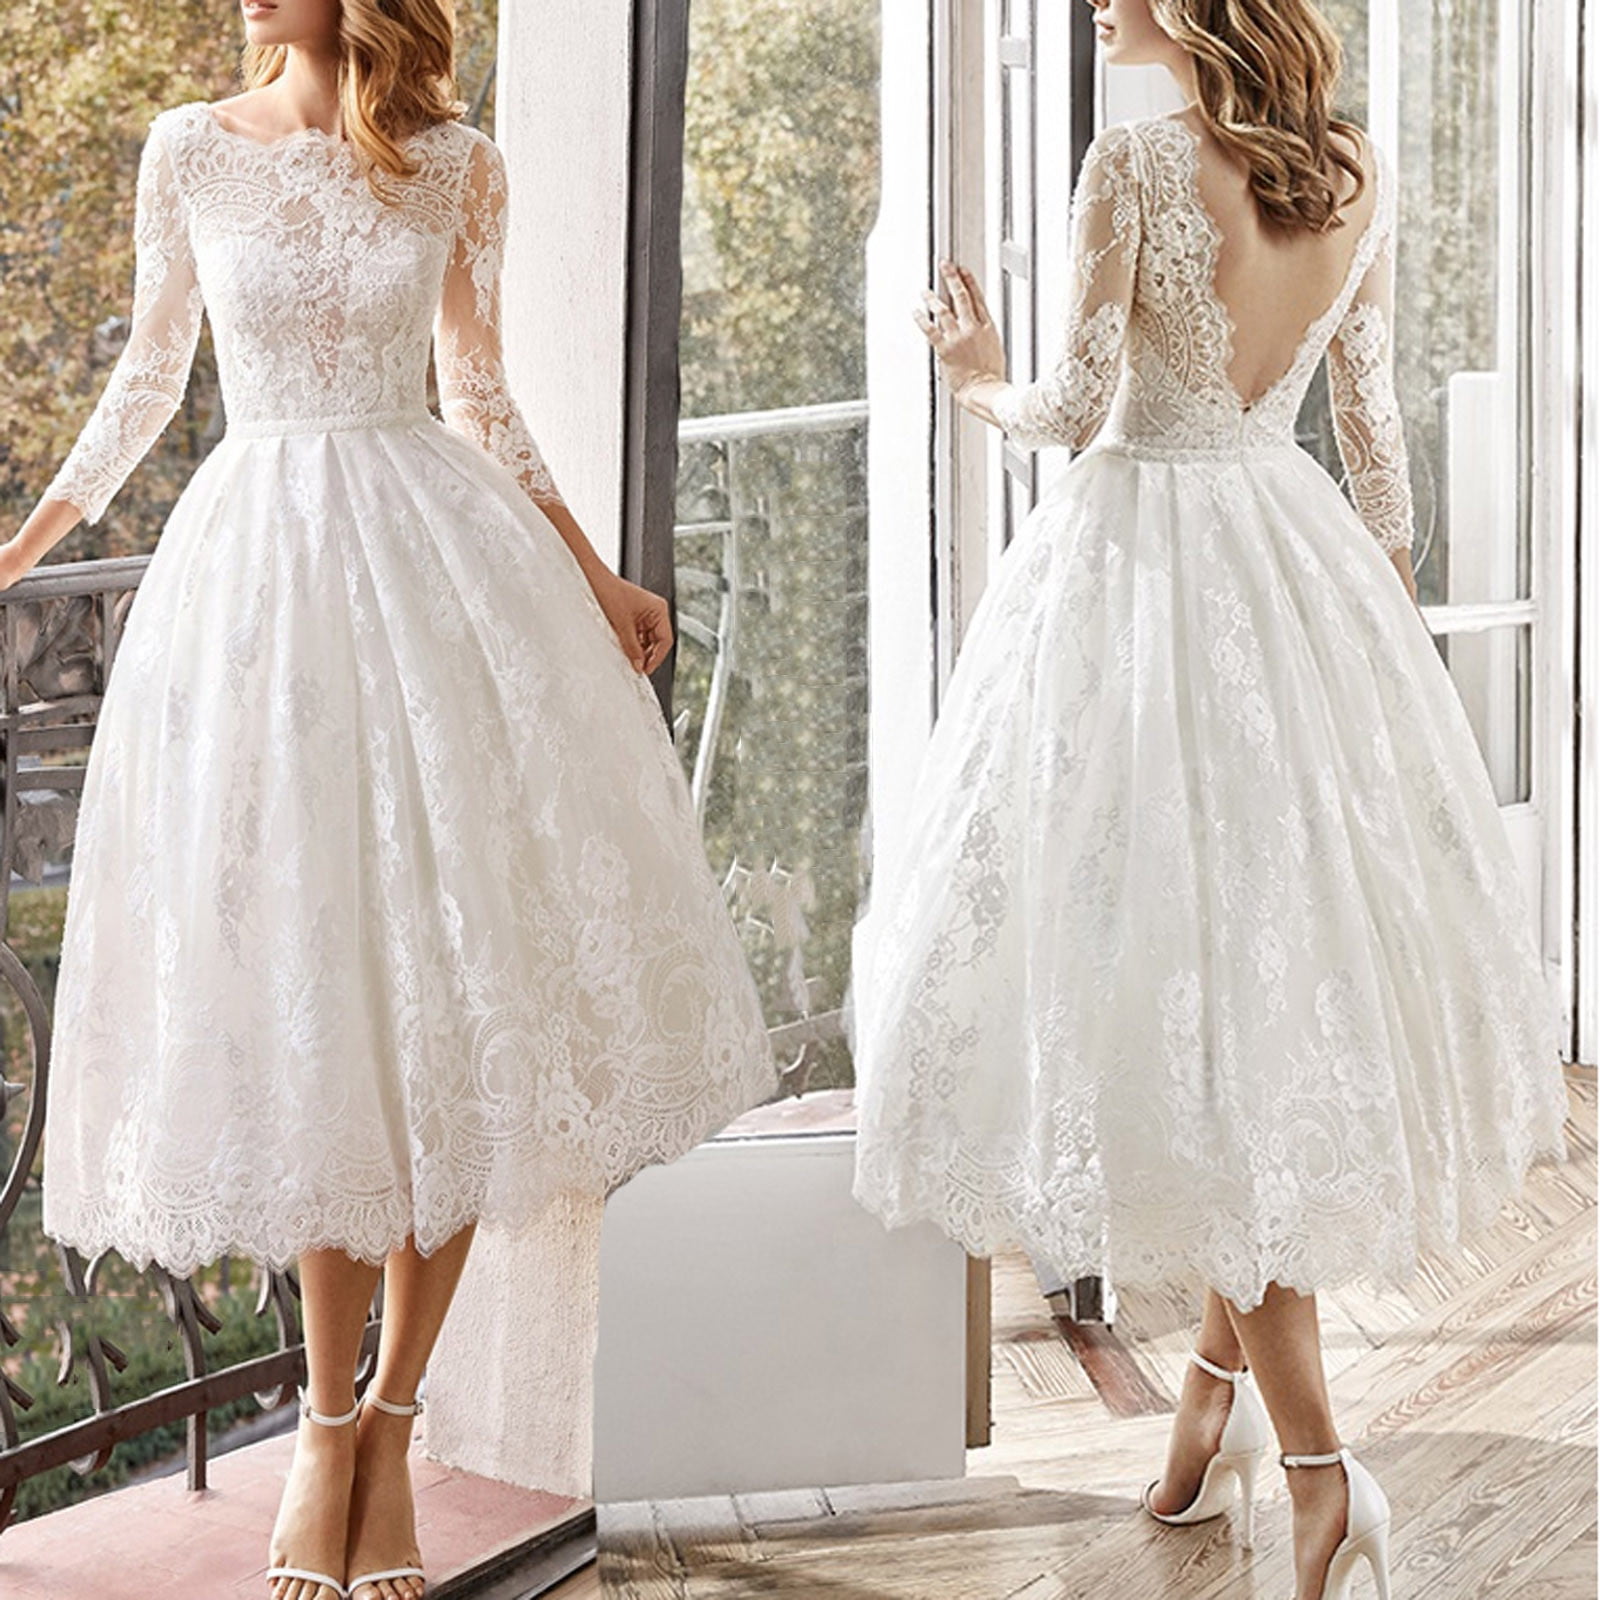 32 Women wedding dress ideas | wedding dresses lace, bridal gowns, wedding  dresses